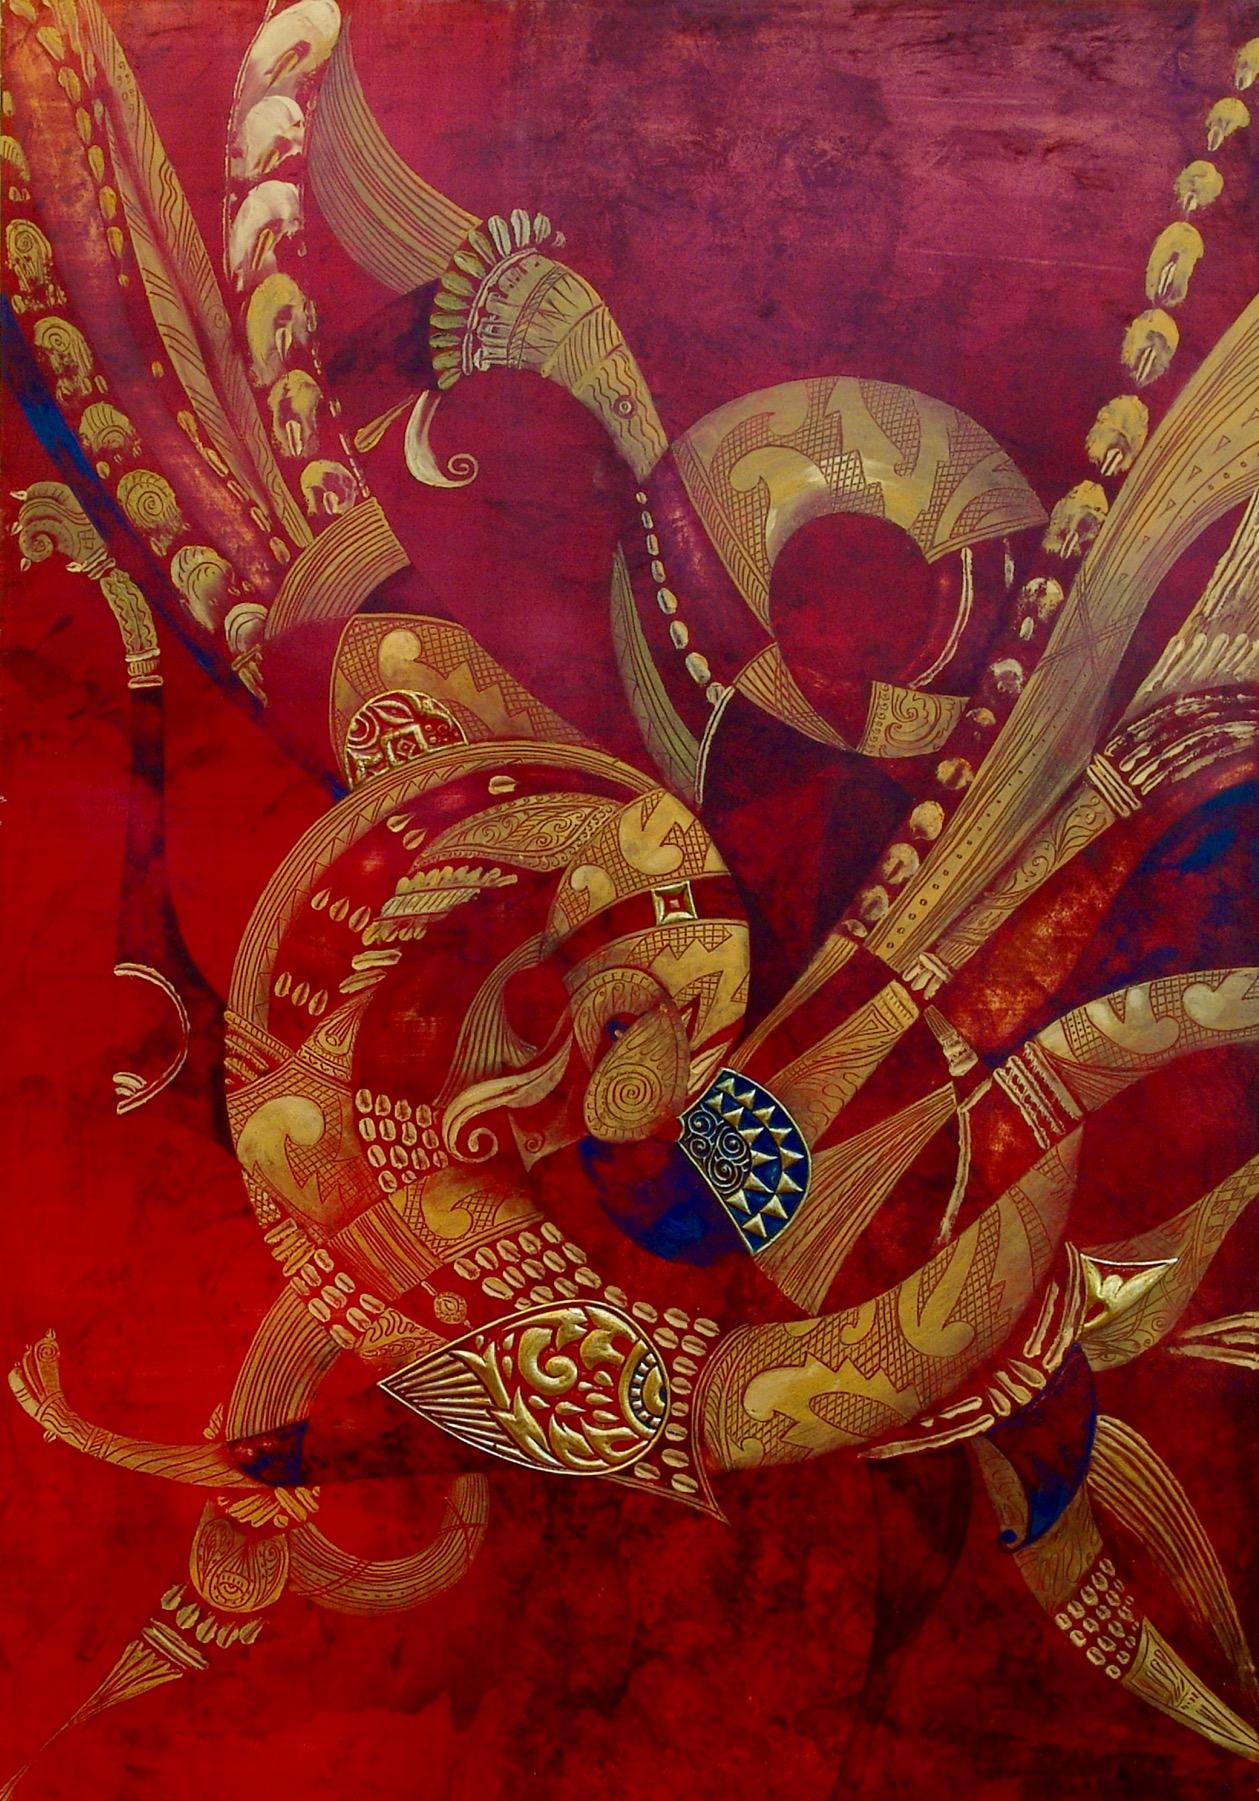 Slavic mythology. Original modern art painting